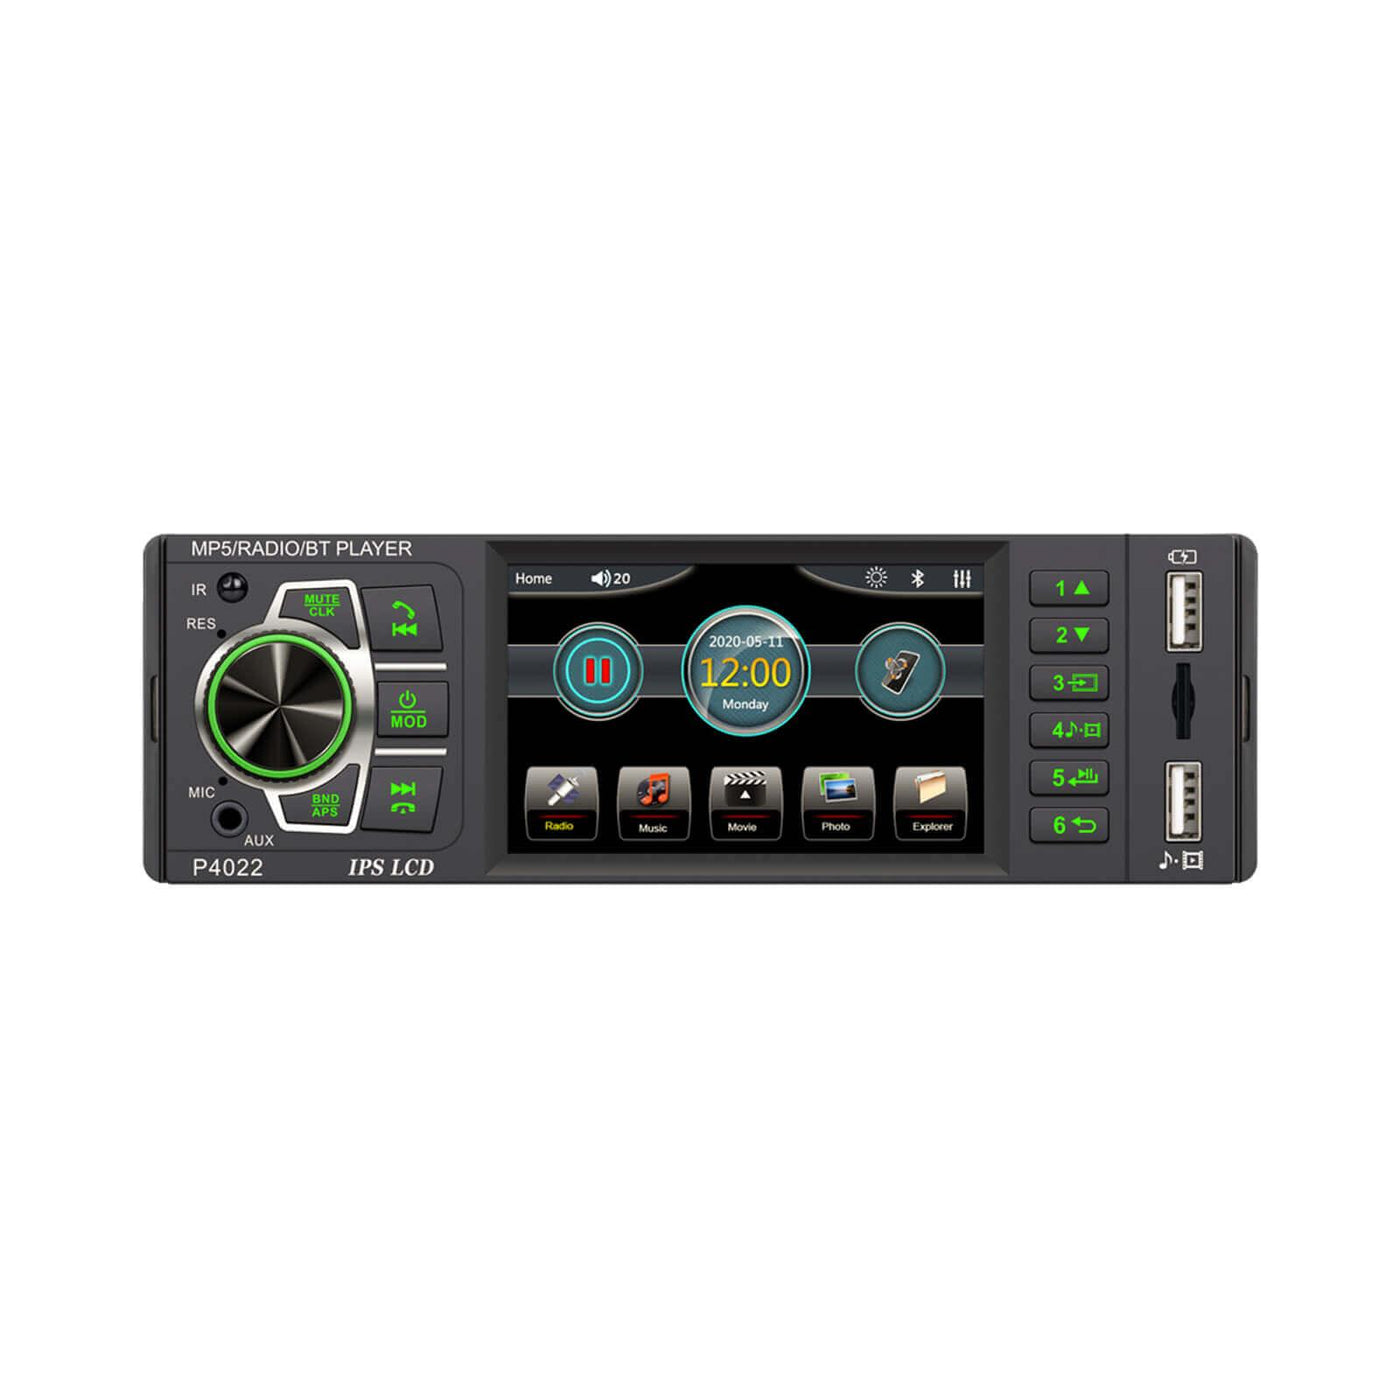 ESSGOO 1 Din Carplay Autoradio Bluetooth AM RDS MP5 Player 5,1 Zoll  Autoradio Stereo IPS Touchscreen Mirror Link Unterstützung DVR